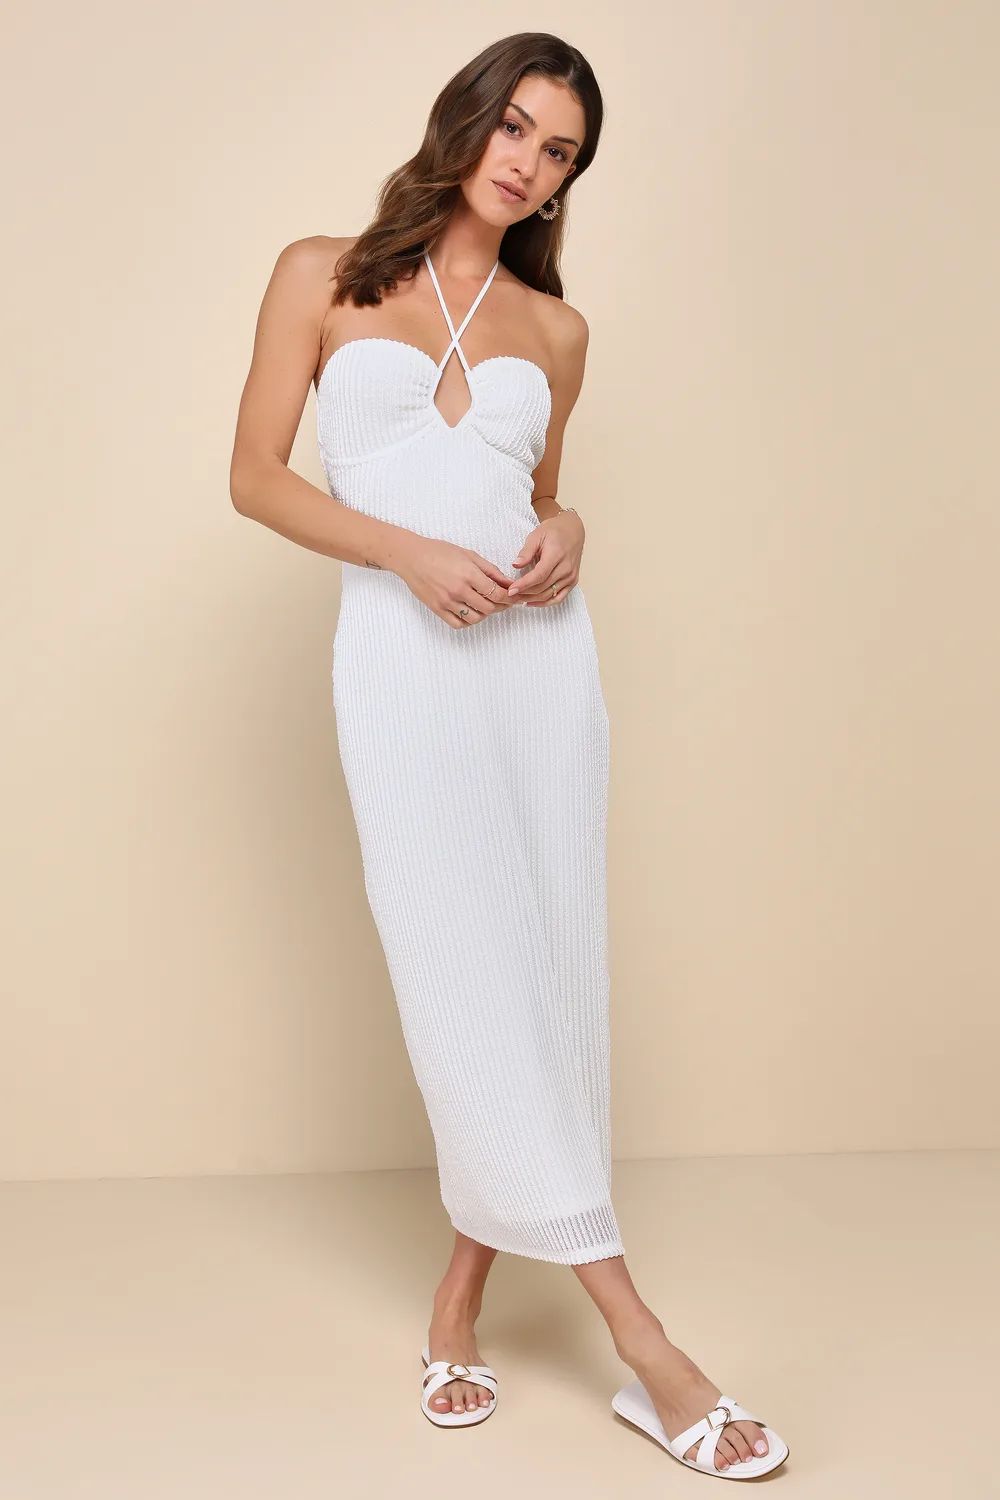 Flirty Passion White Textured Ribbed Knit Halter Midi Dress | Lulus